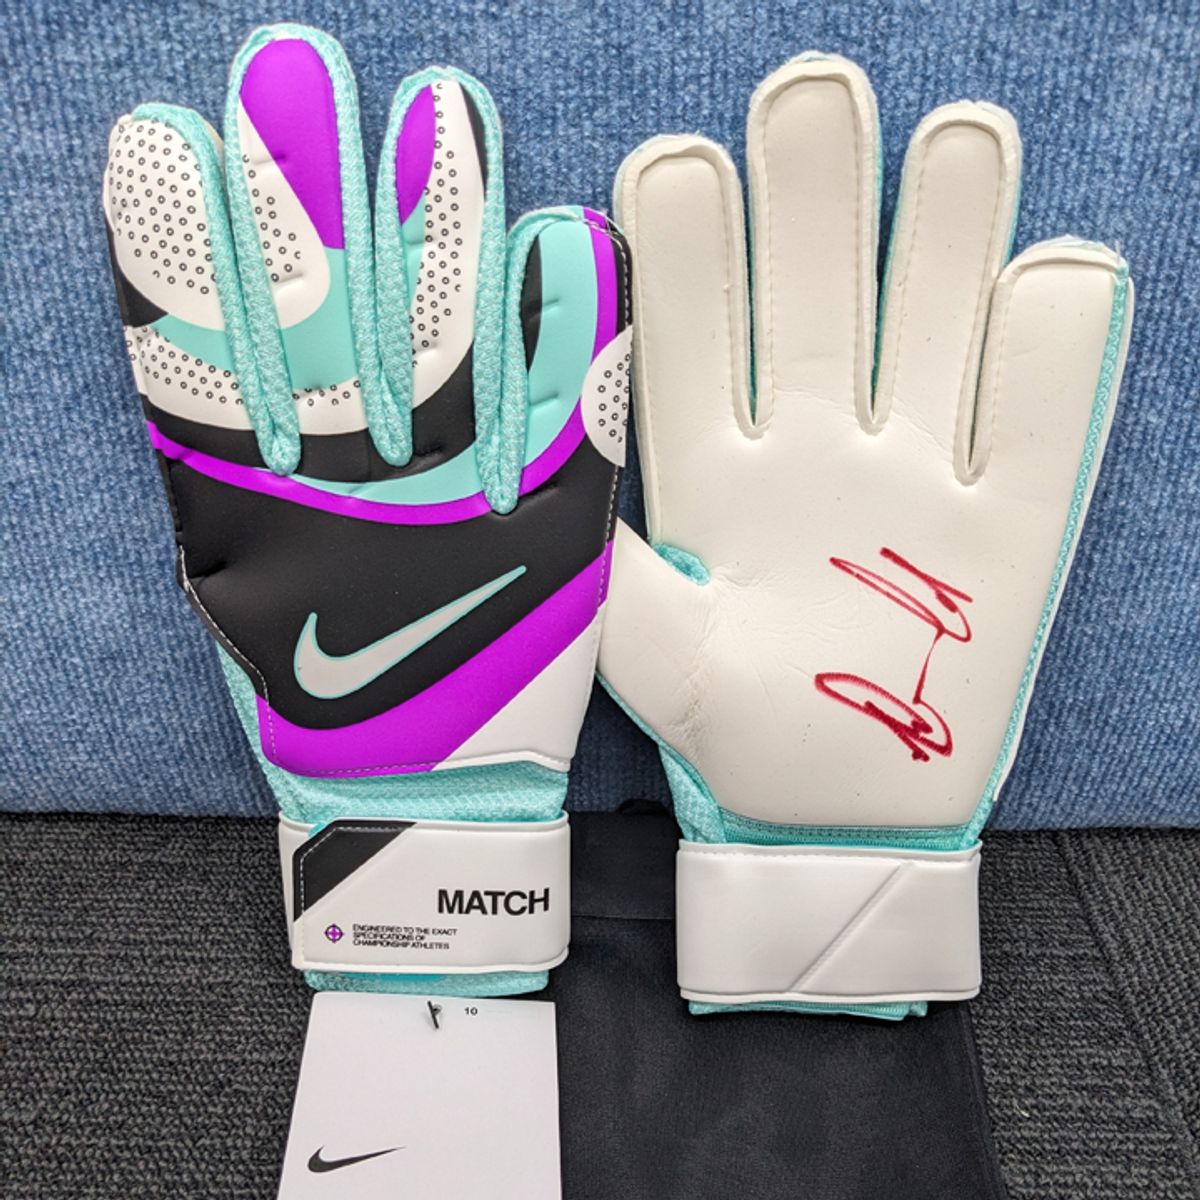 Goal Keeper Gloves Signed by Mackenzie Arnold - Hero image